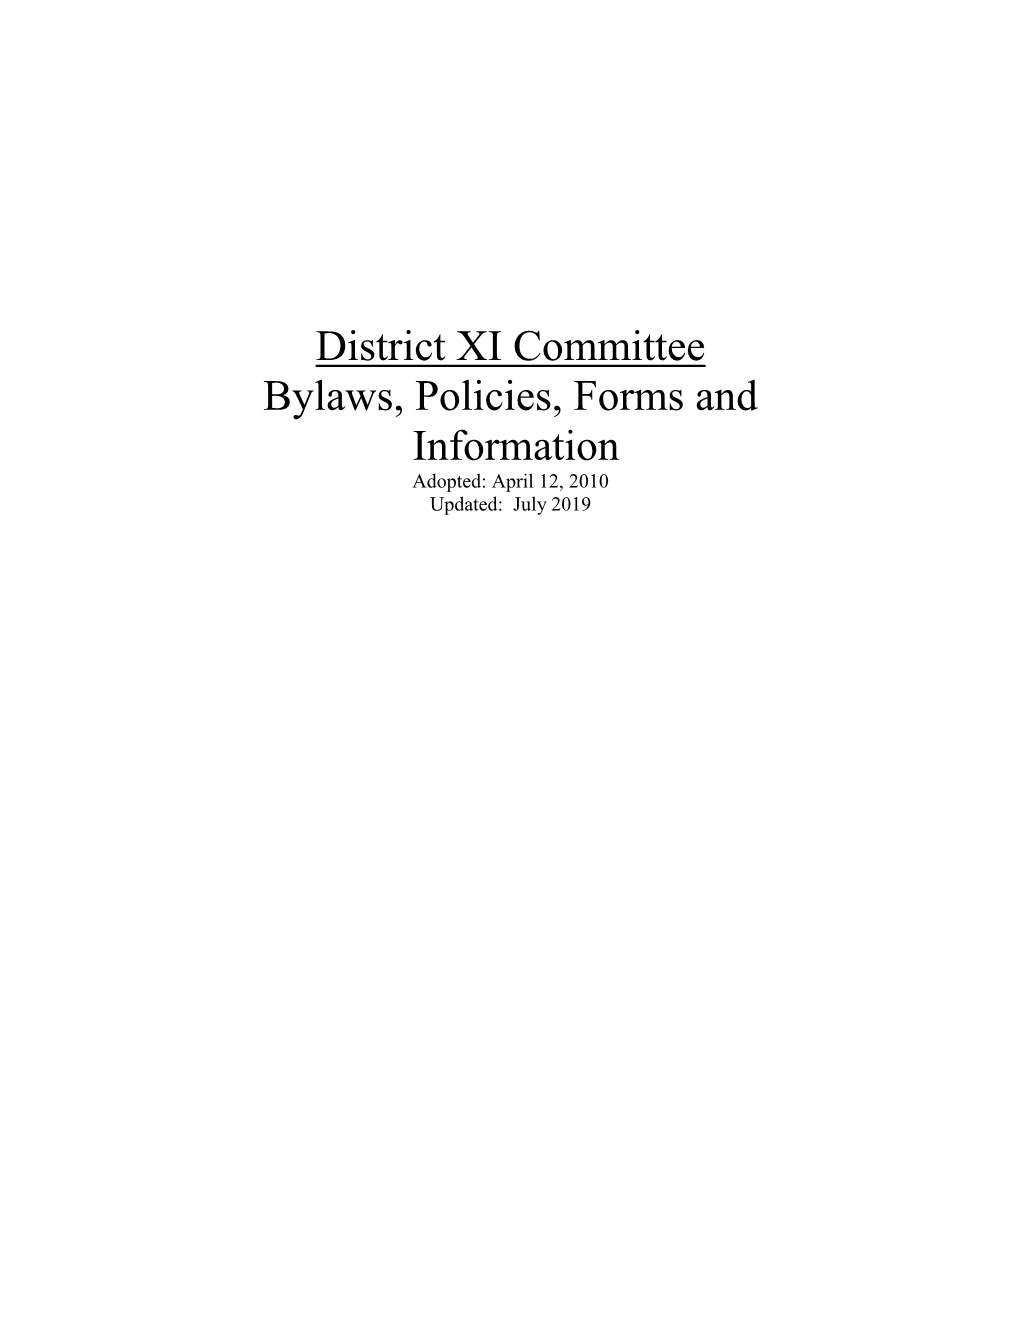 District IX Committee